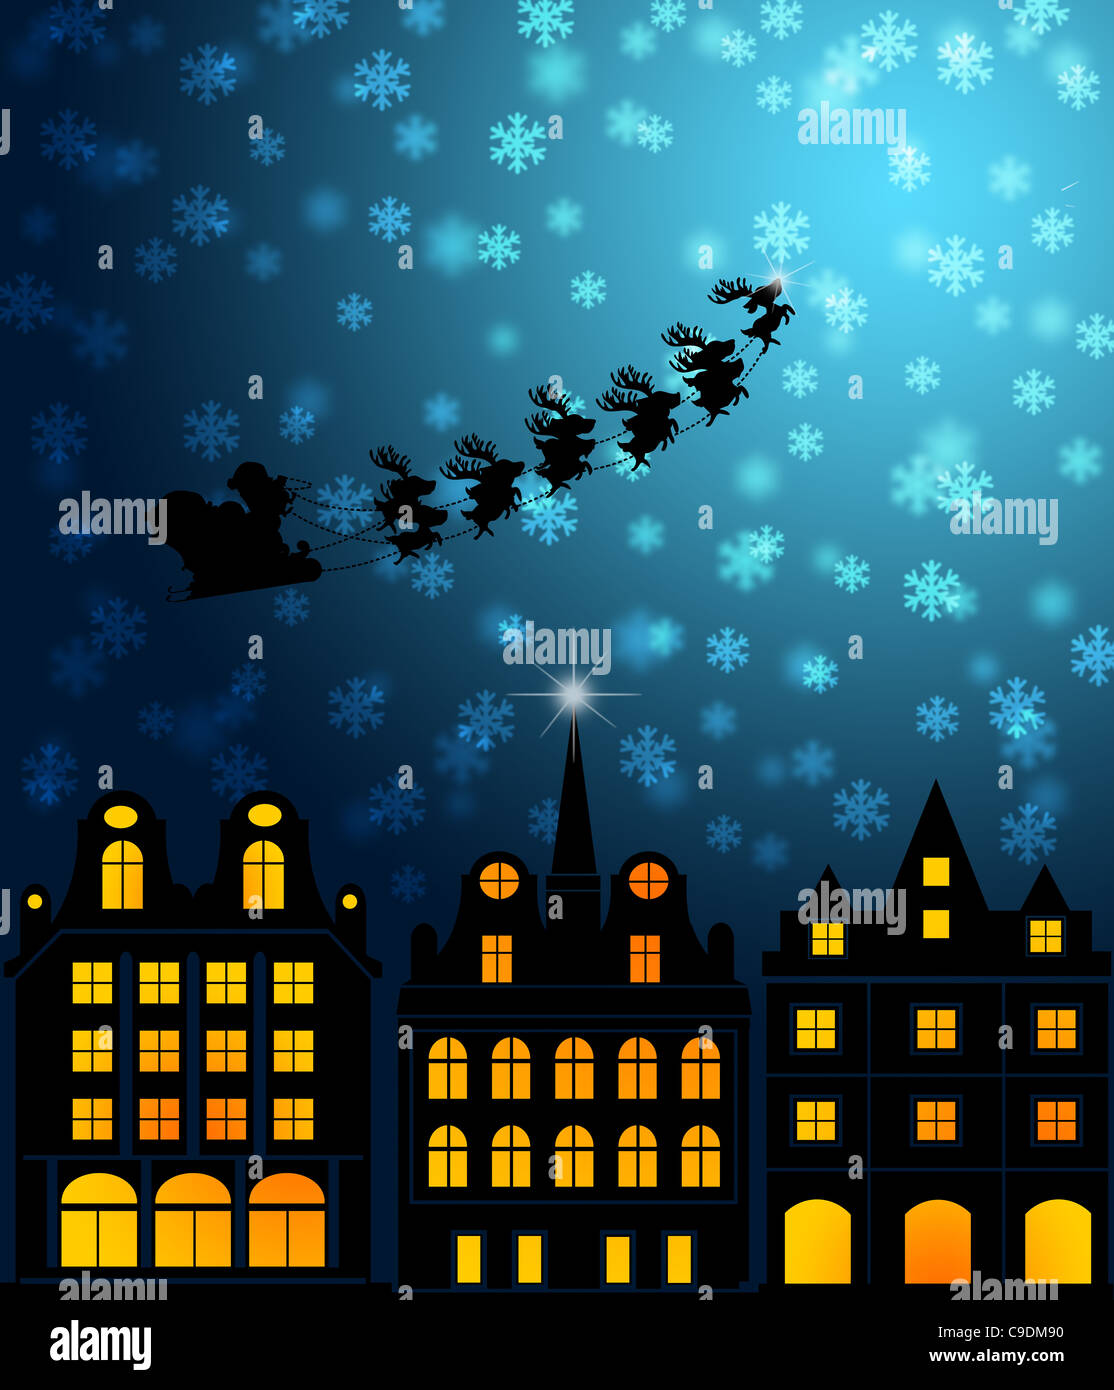 Santa Sleigh Reindeer Flying Over Victorian Houses on Snowy Night Illustration Stock Photo